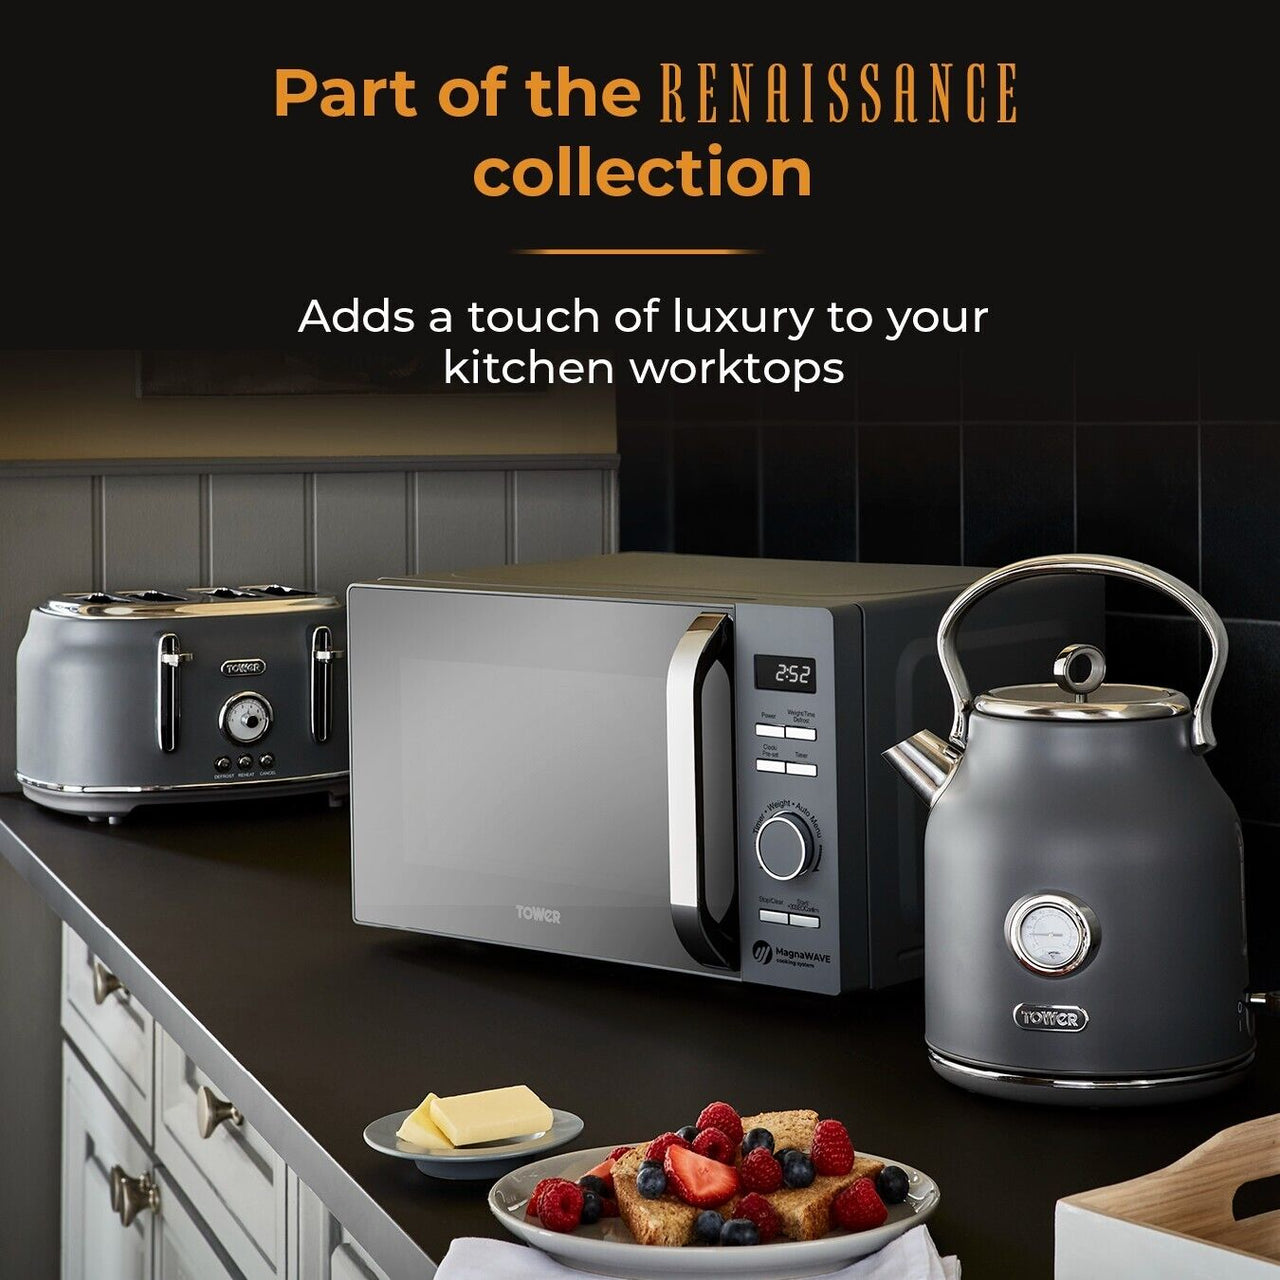 Tower Renaissance Grey Kettle 4 Slice Toaster & 800W 20L Microwave Kitchen Set